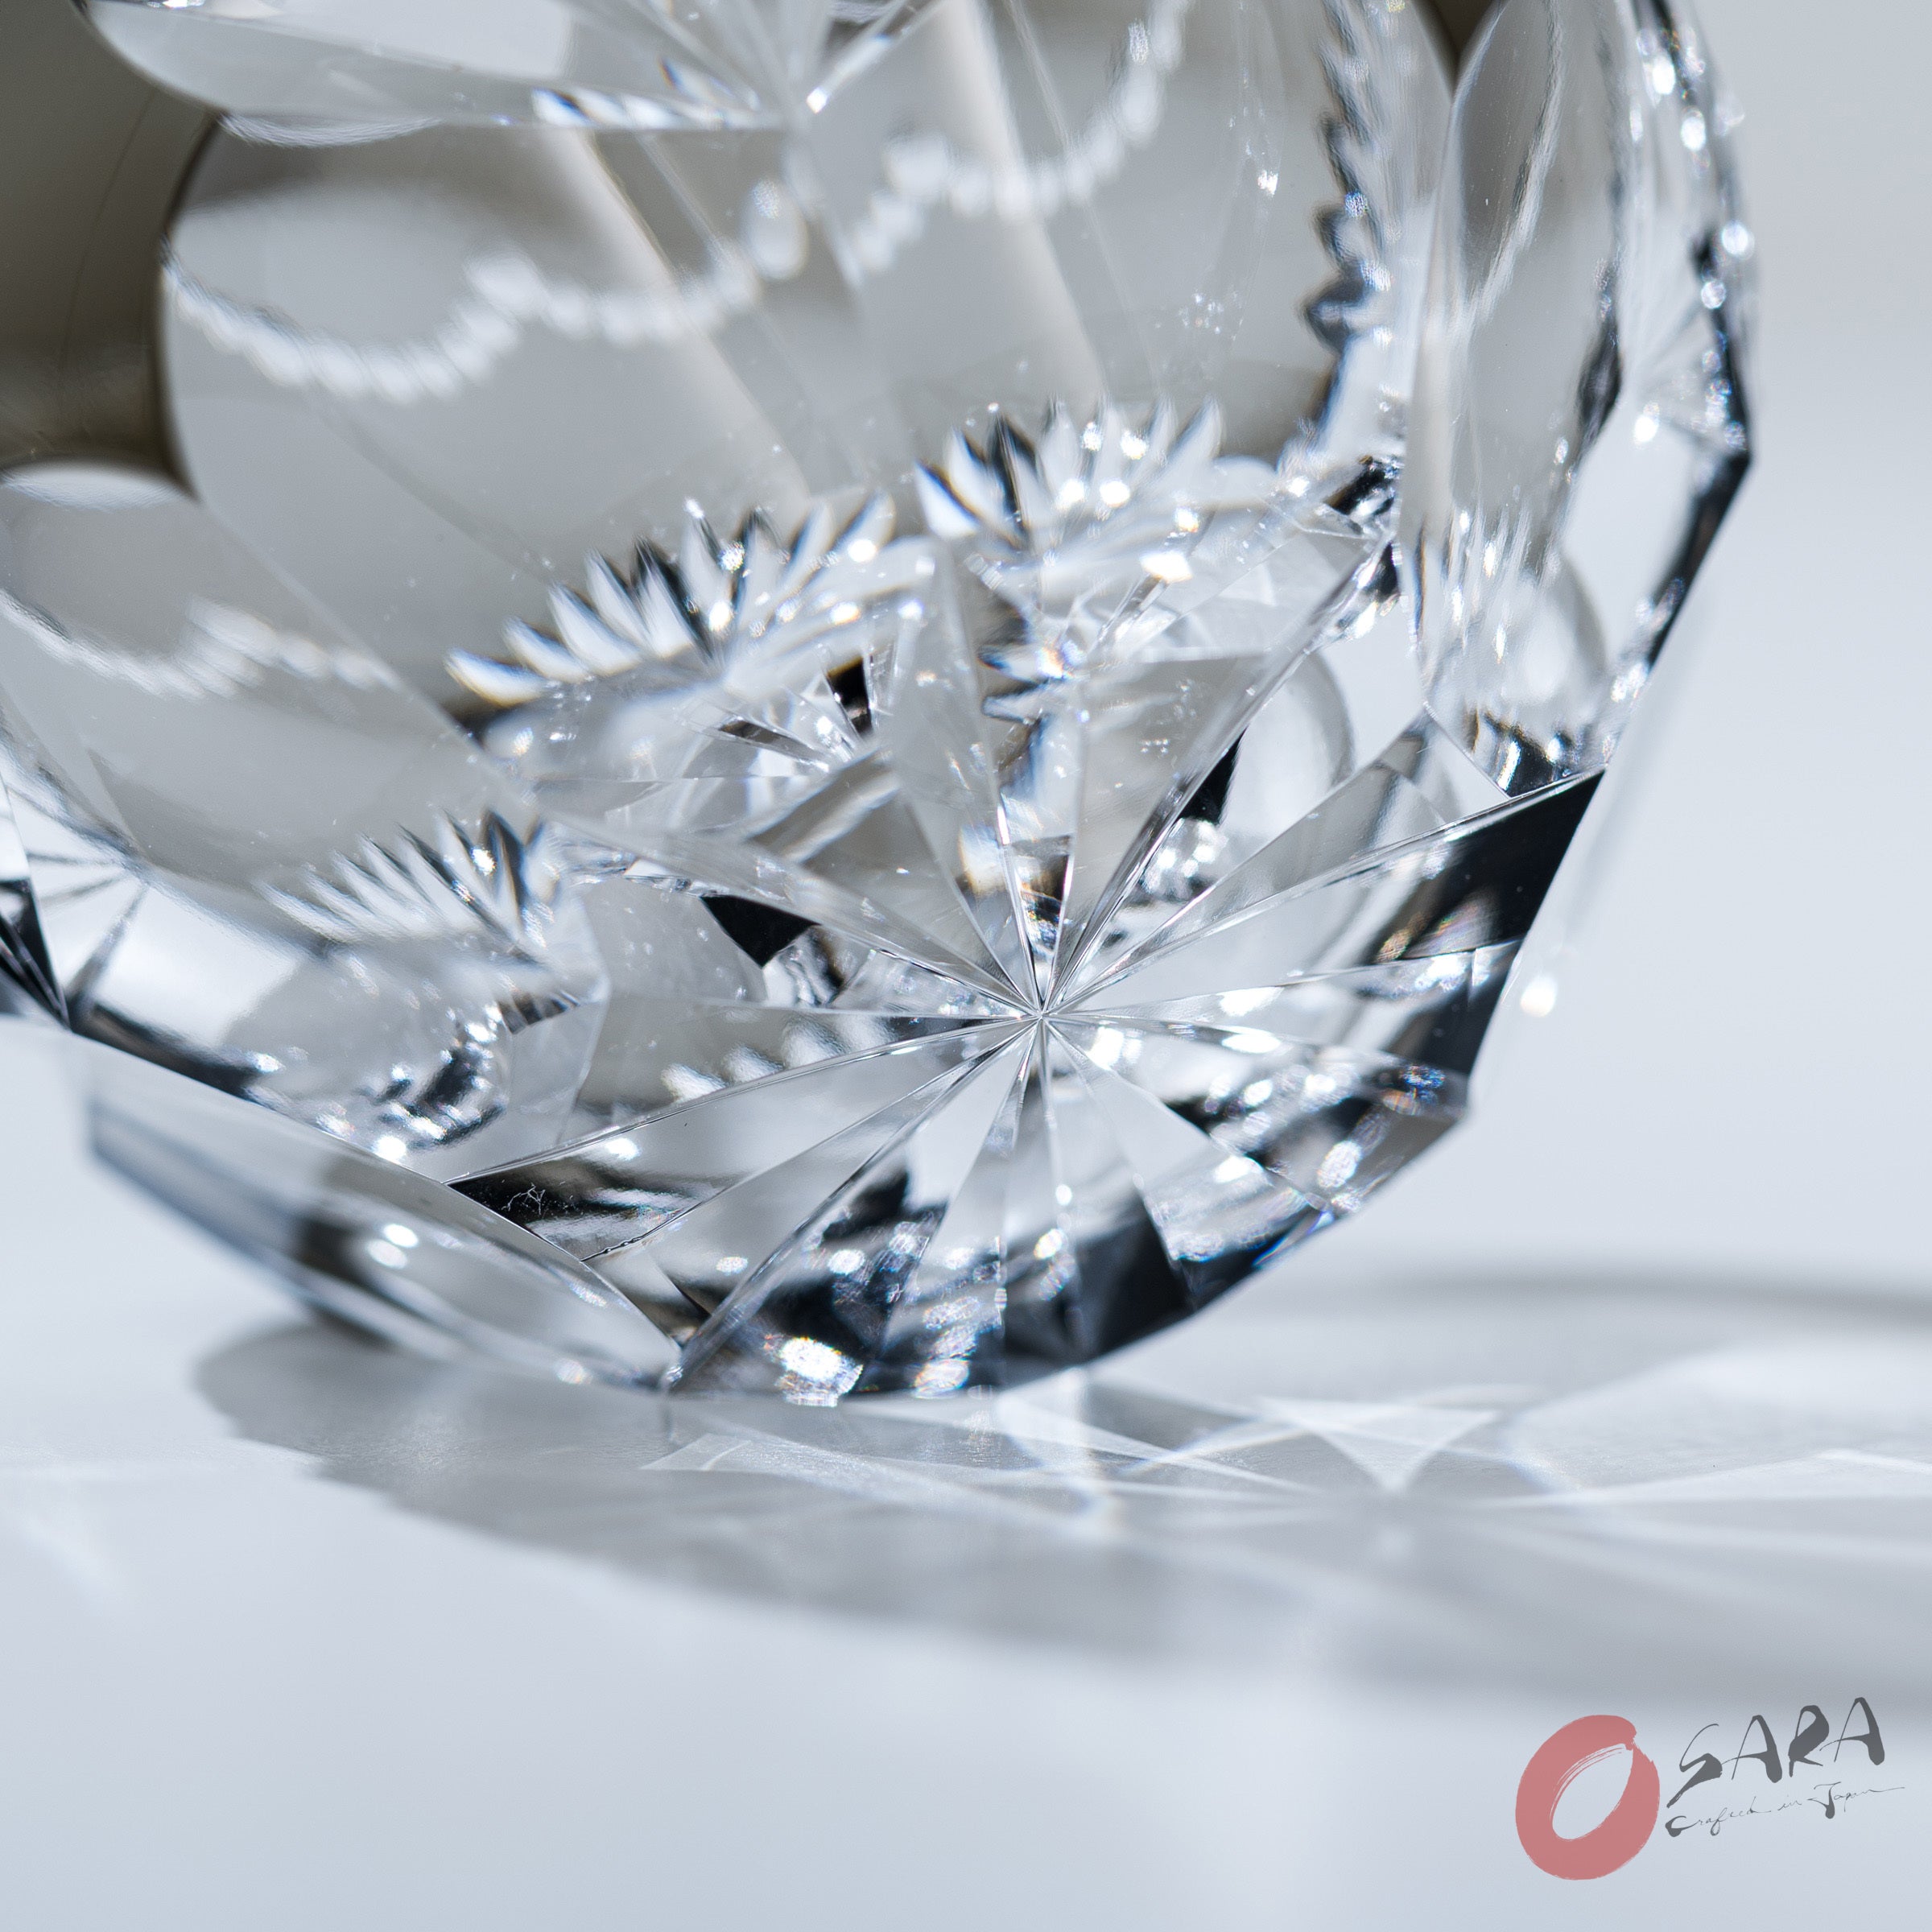 KAGAMI Crystal Edo-Kiriko Rock Glass - Ardisia Crenata / 万両